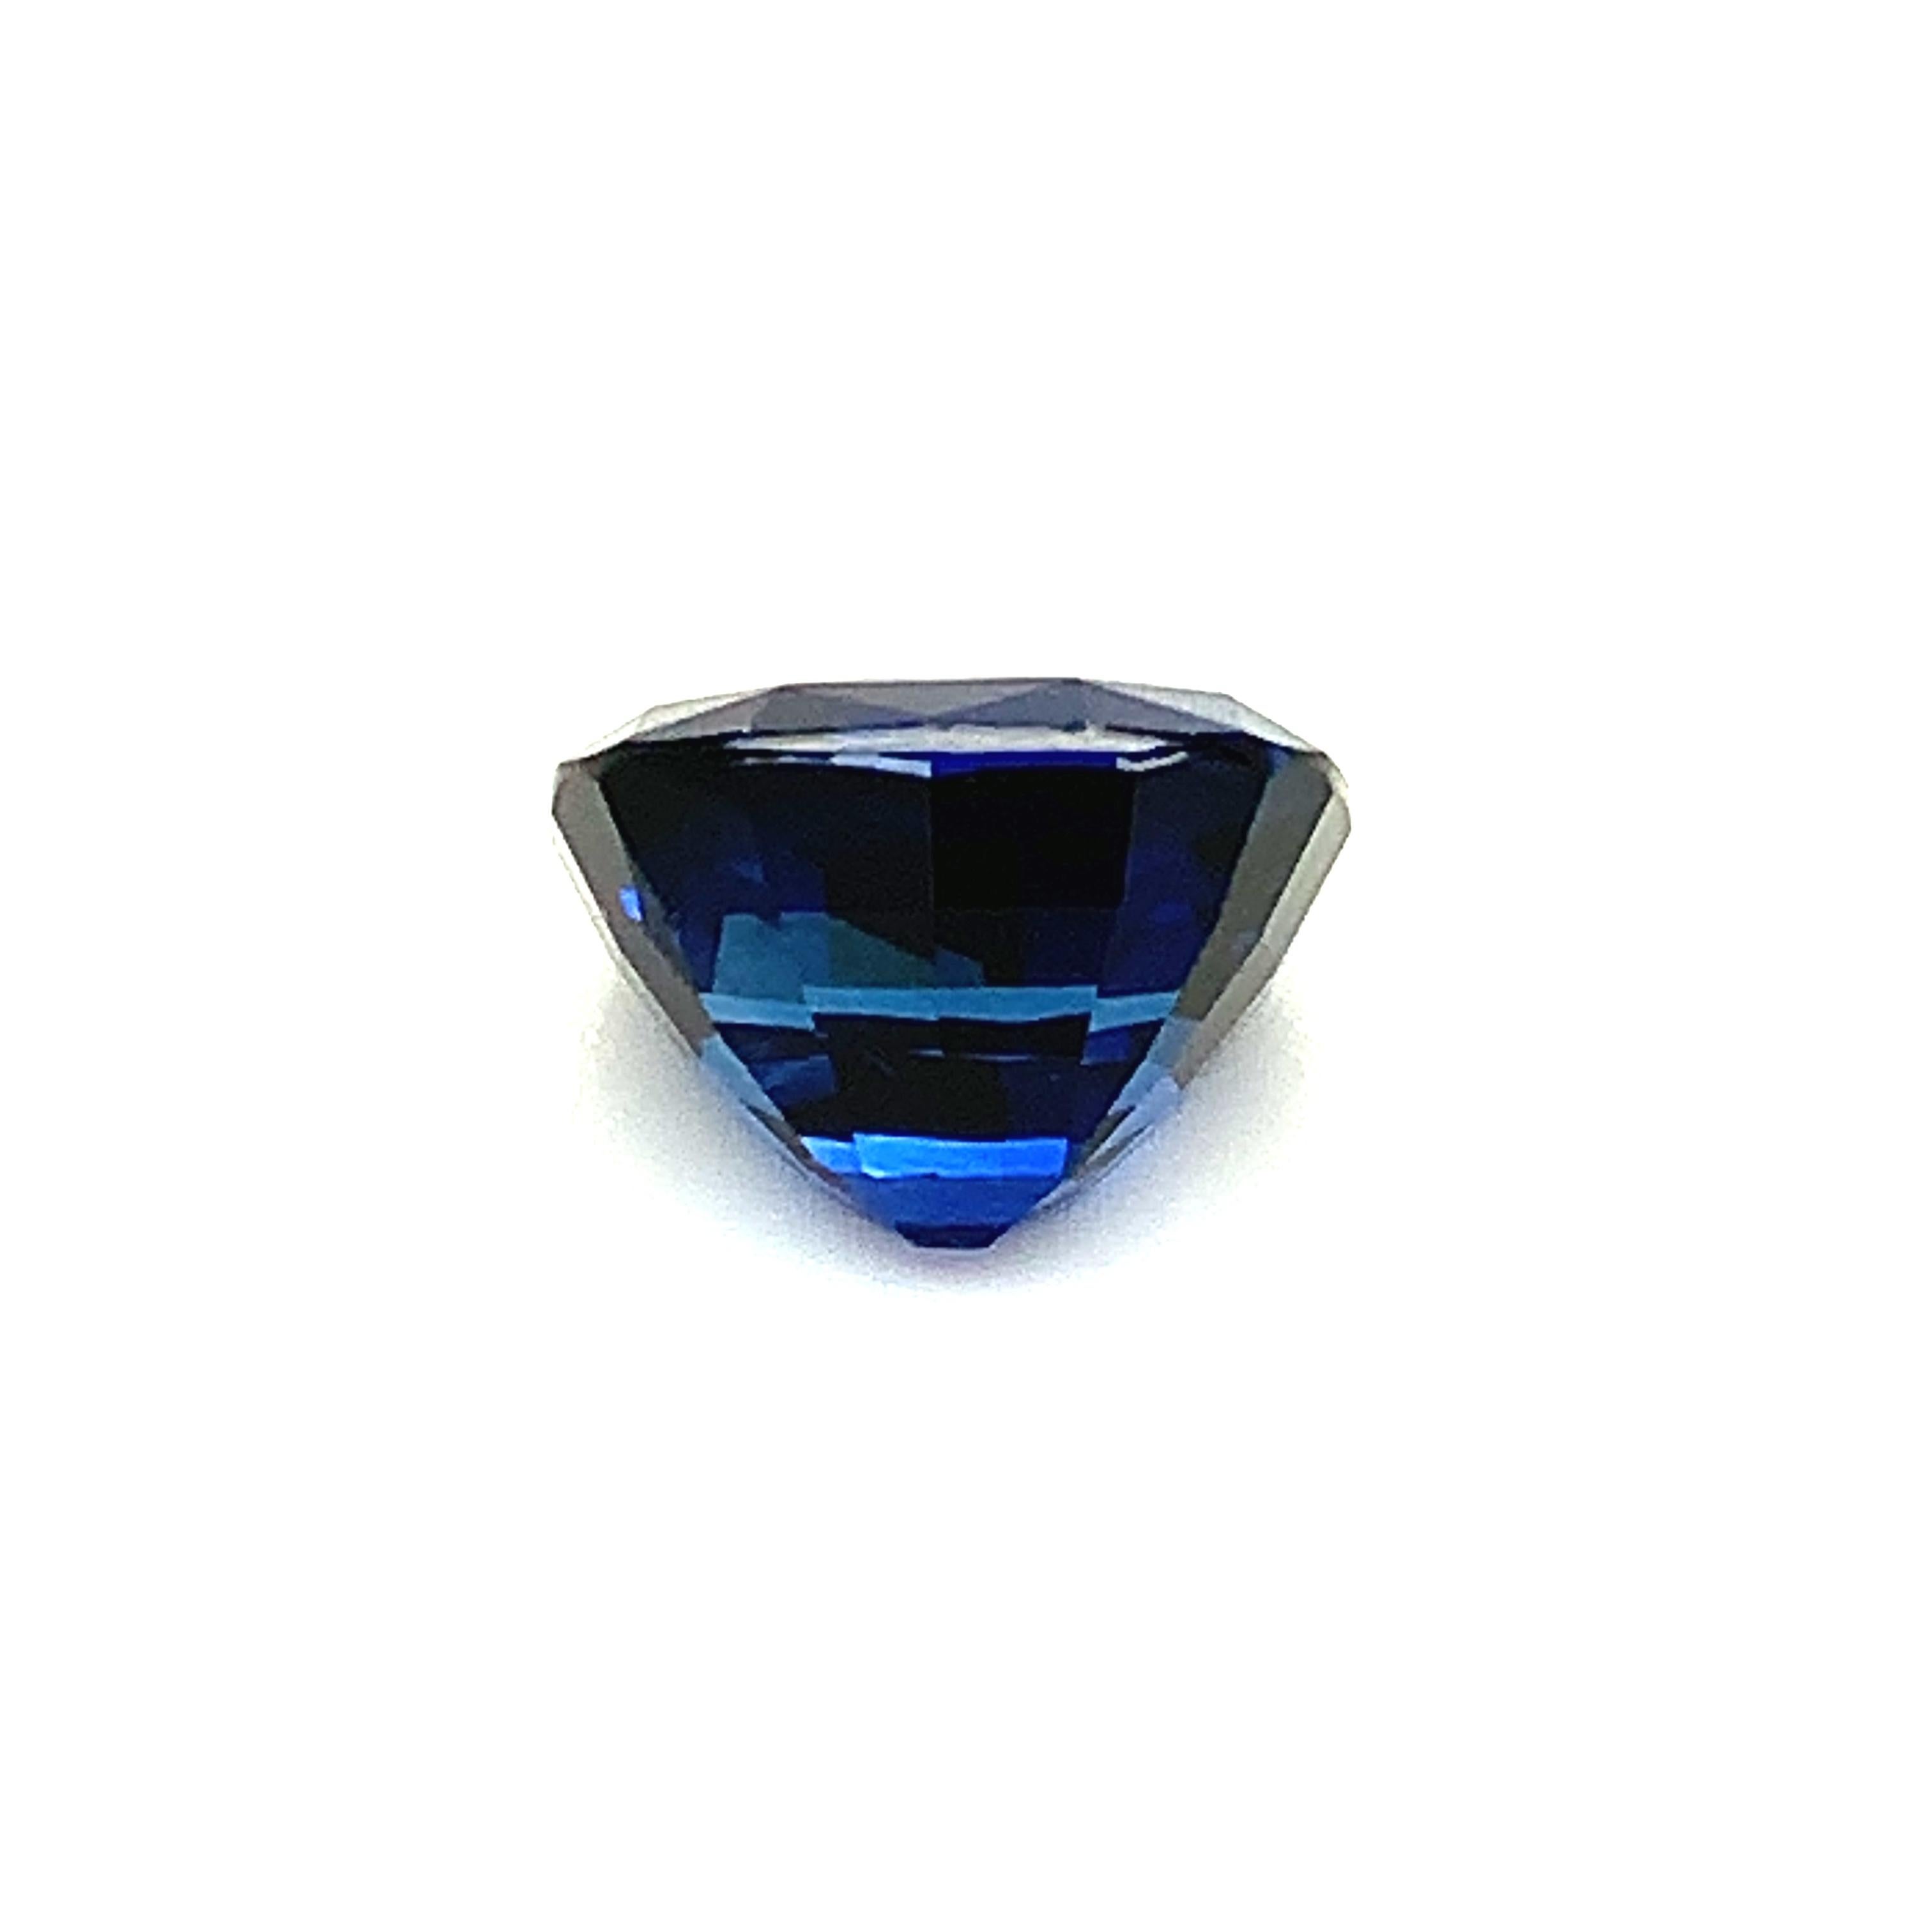 5.77 Carat Royal Blue Sapphire Cushion, Unset Loose Gemstone, GIA Certified 2